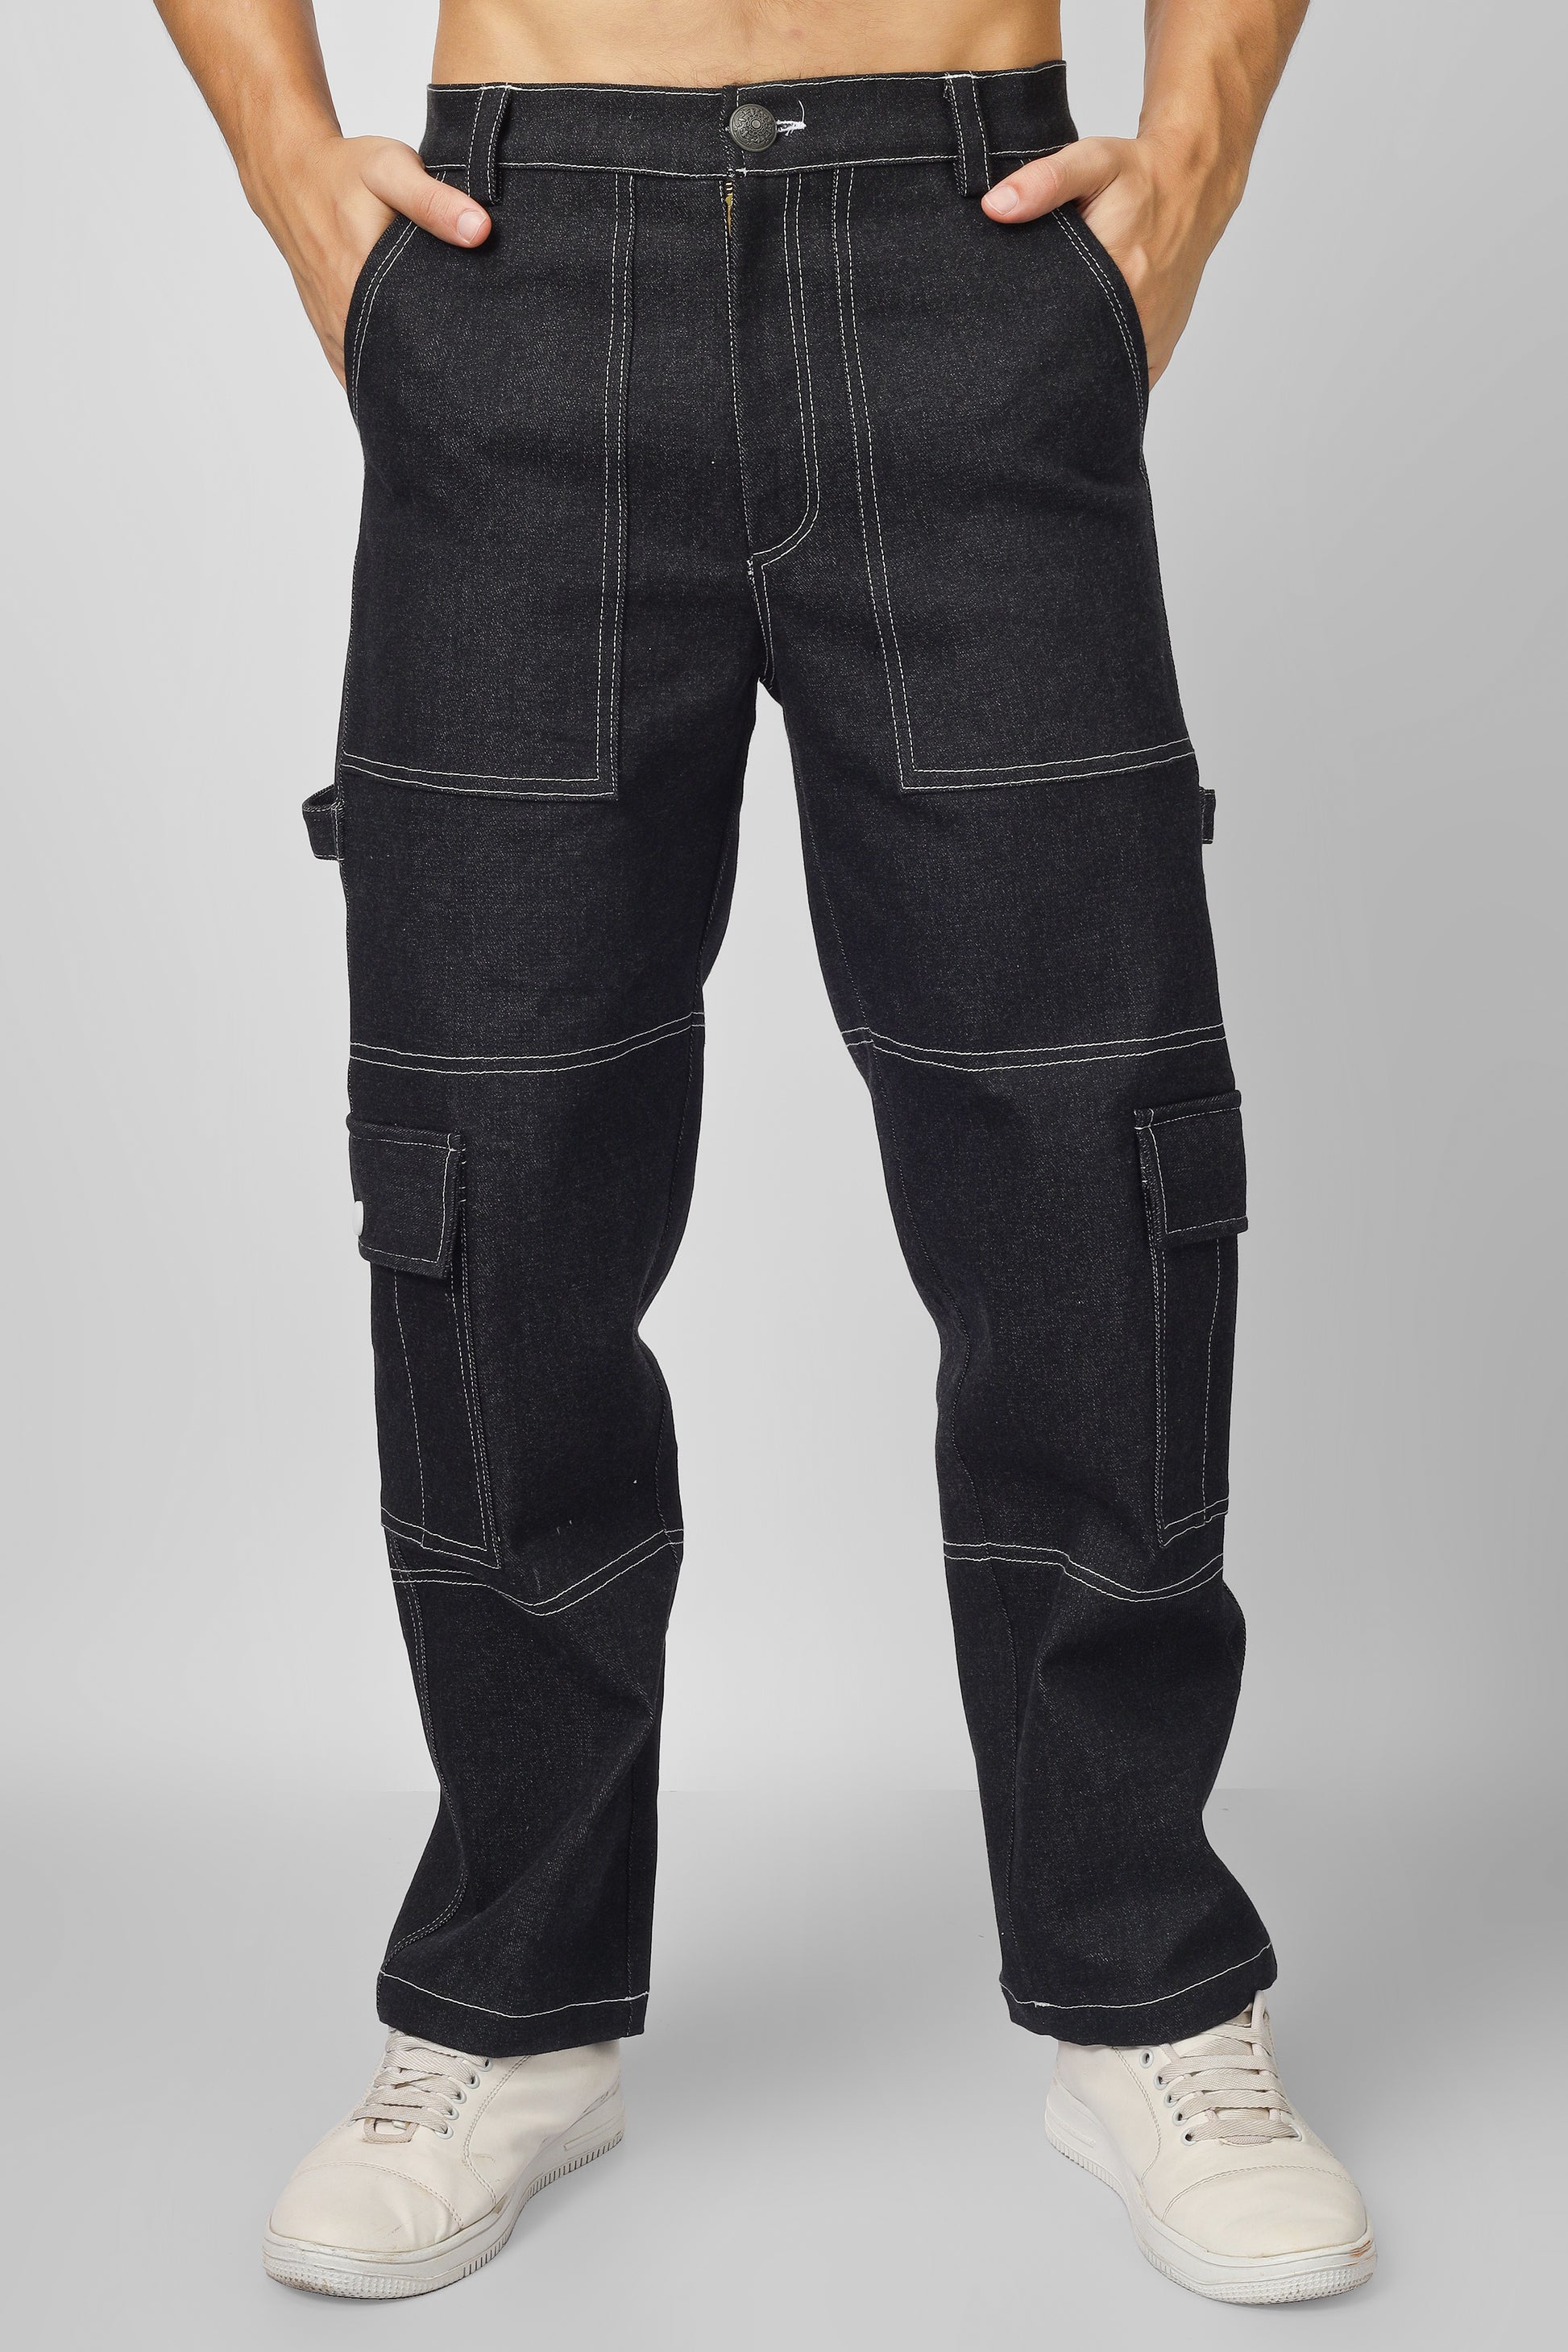 Trendsi Elastic Waist Cargo Pants Black / L